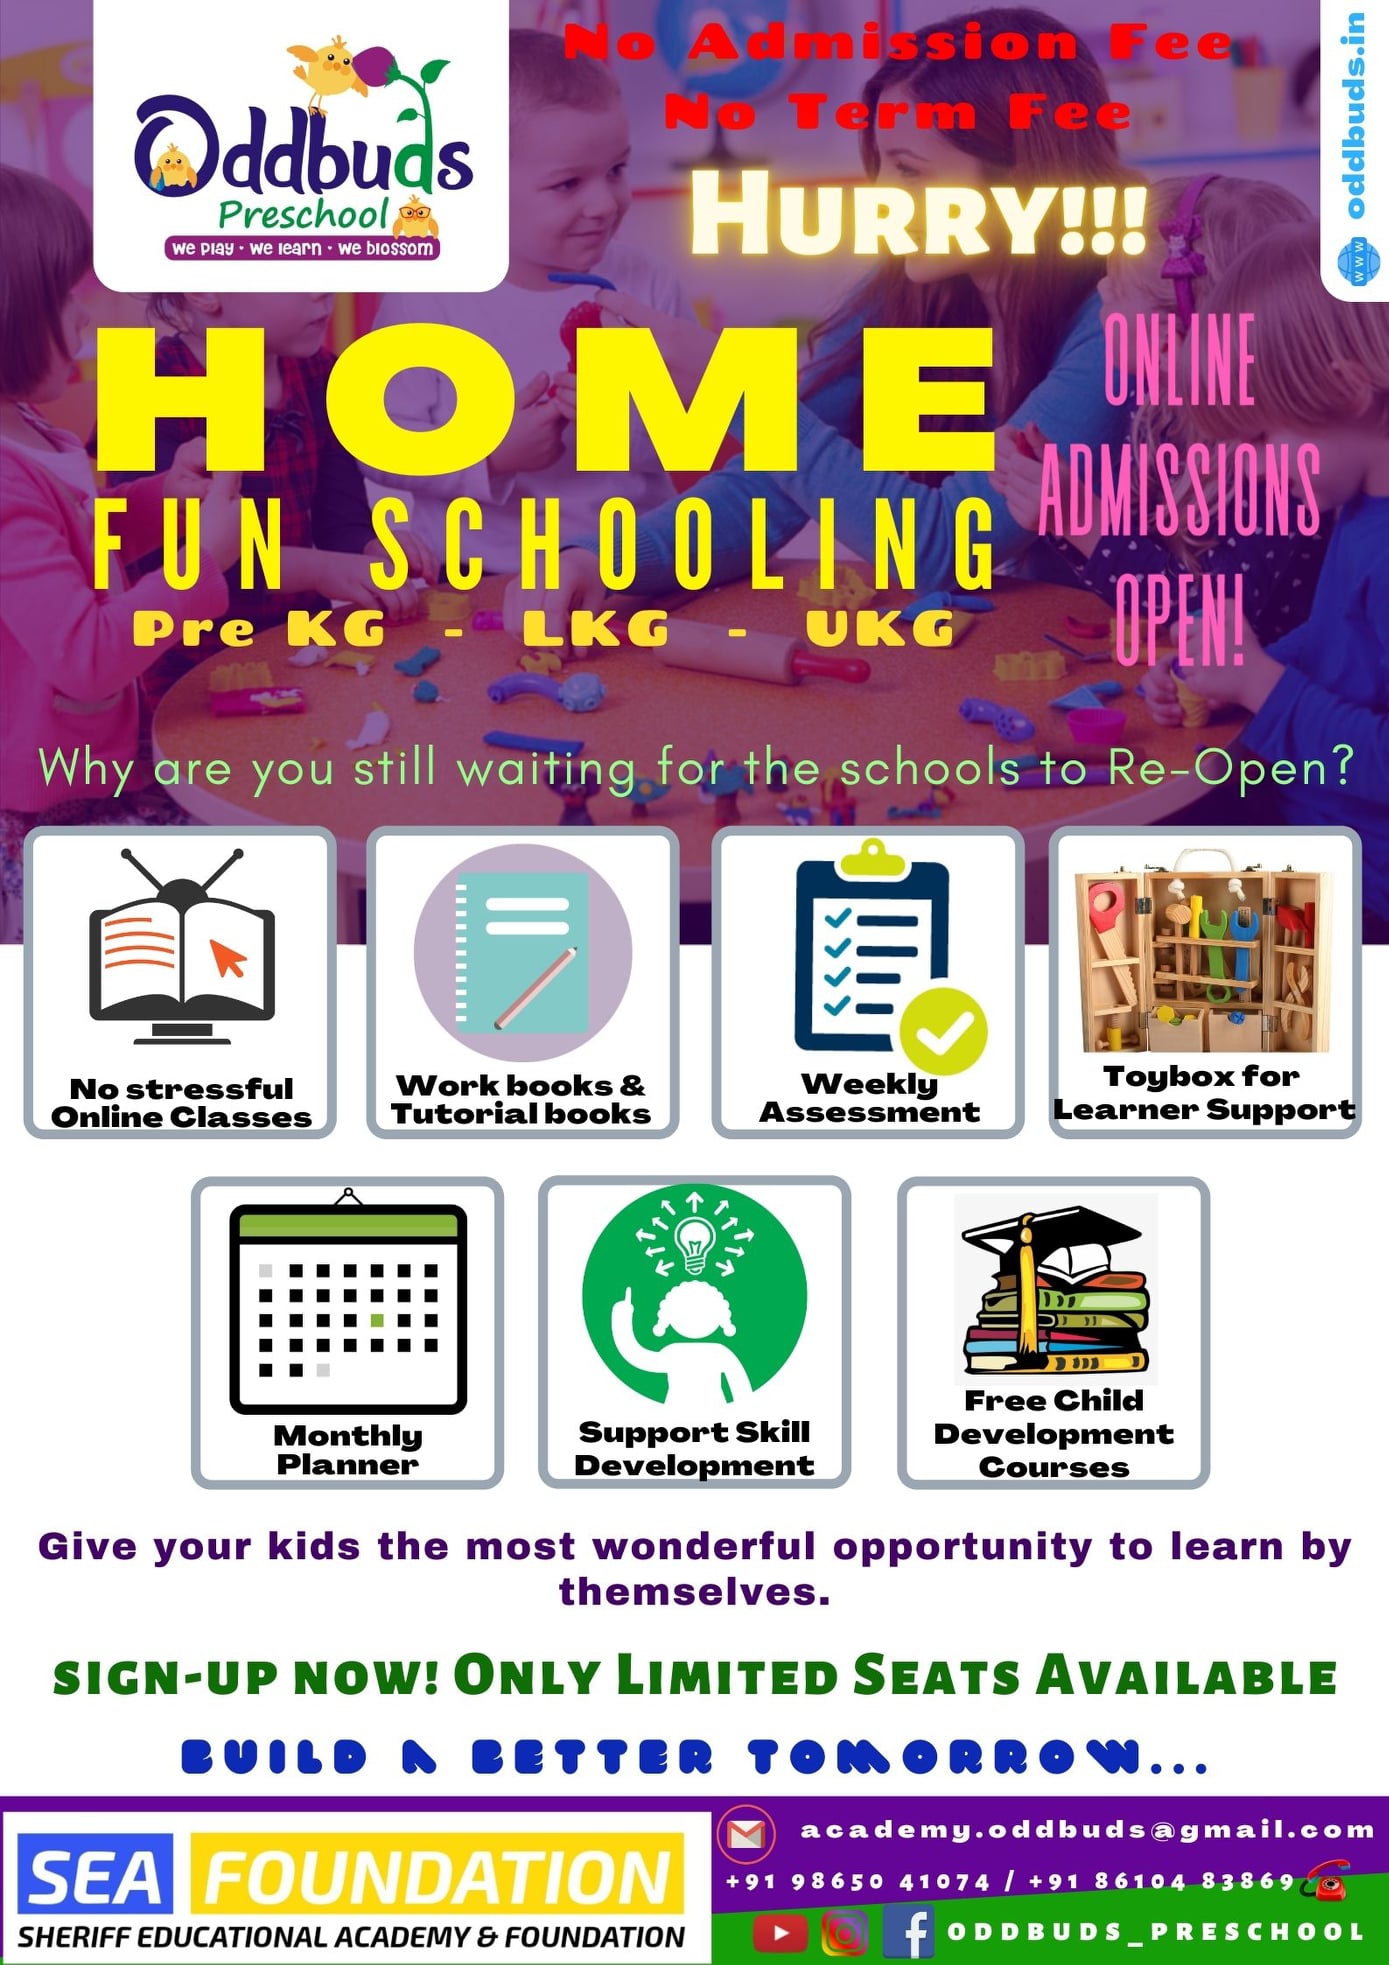 Home fun schooling- Online admission - Oddbuds Preschool